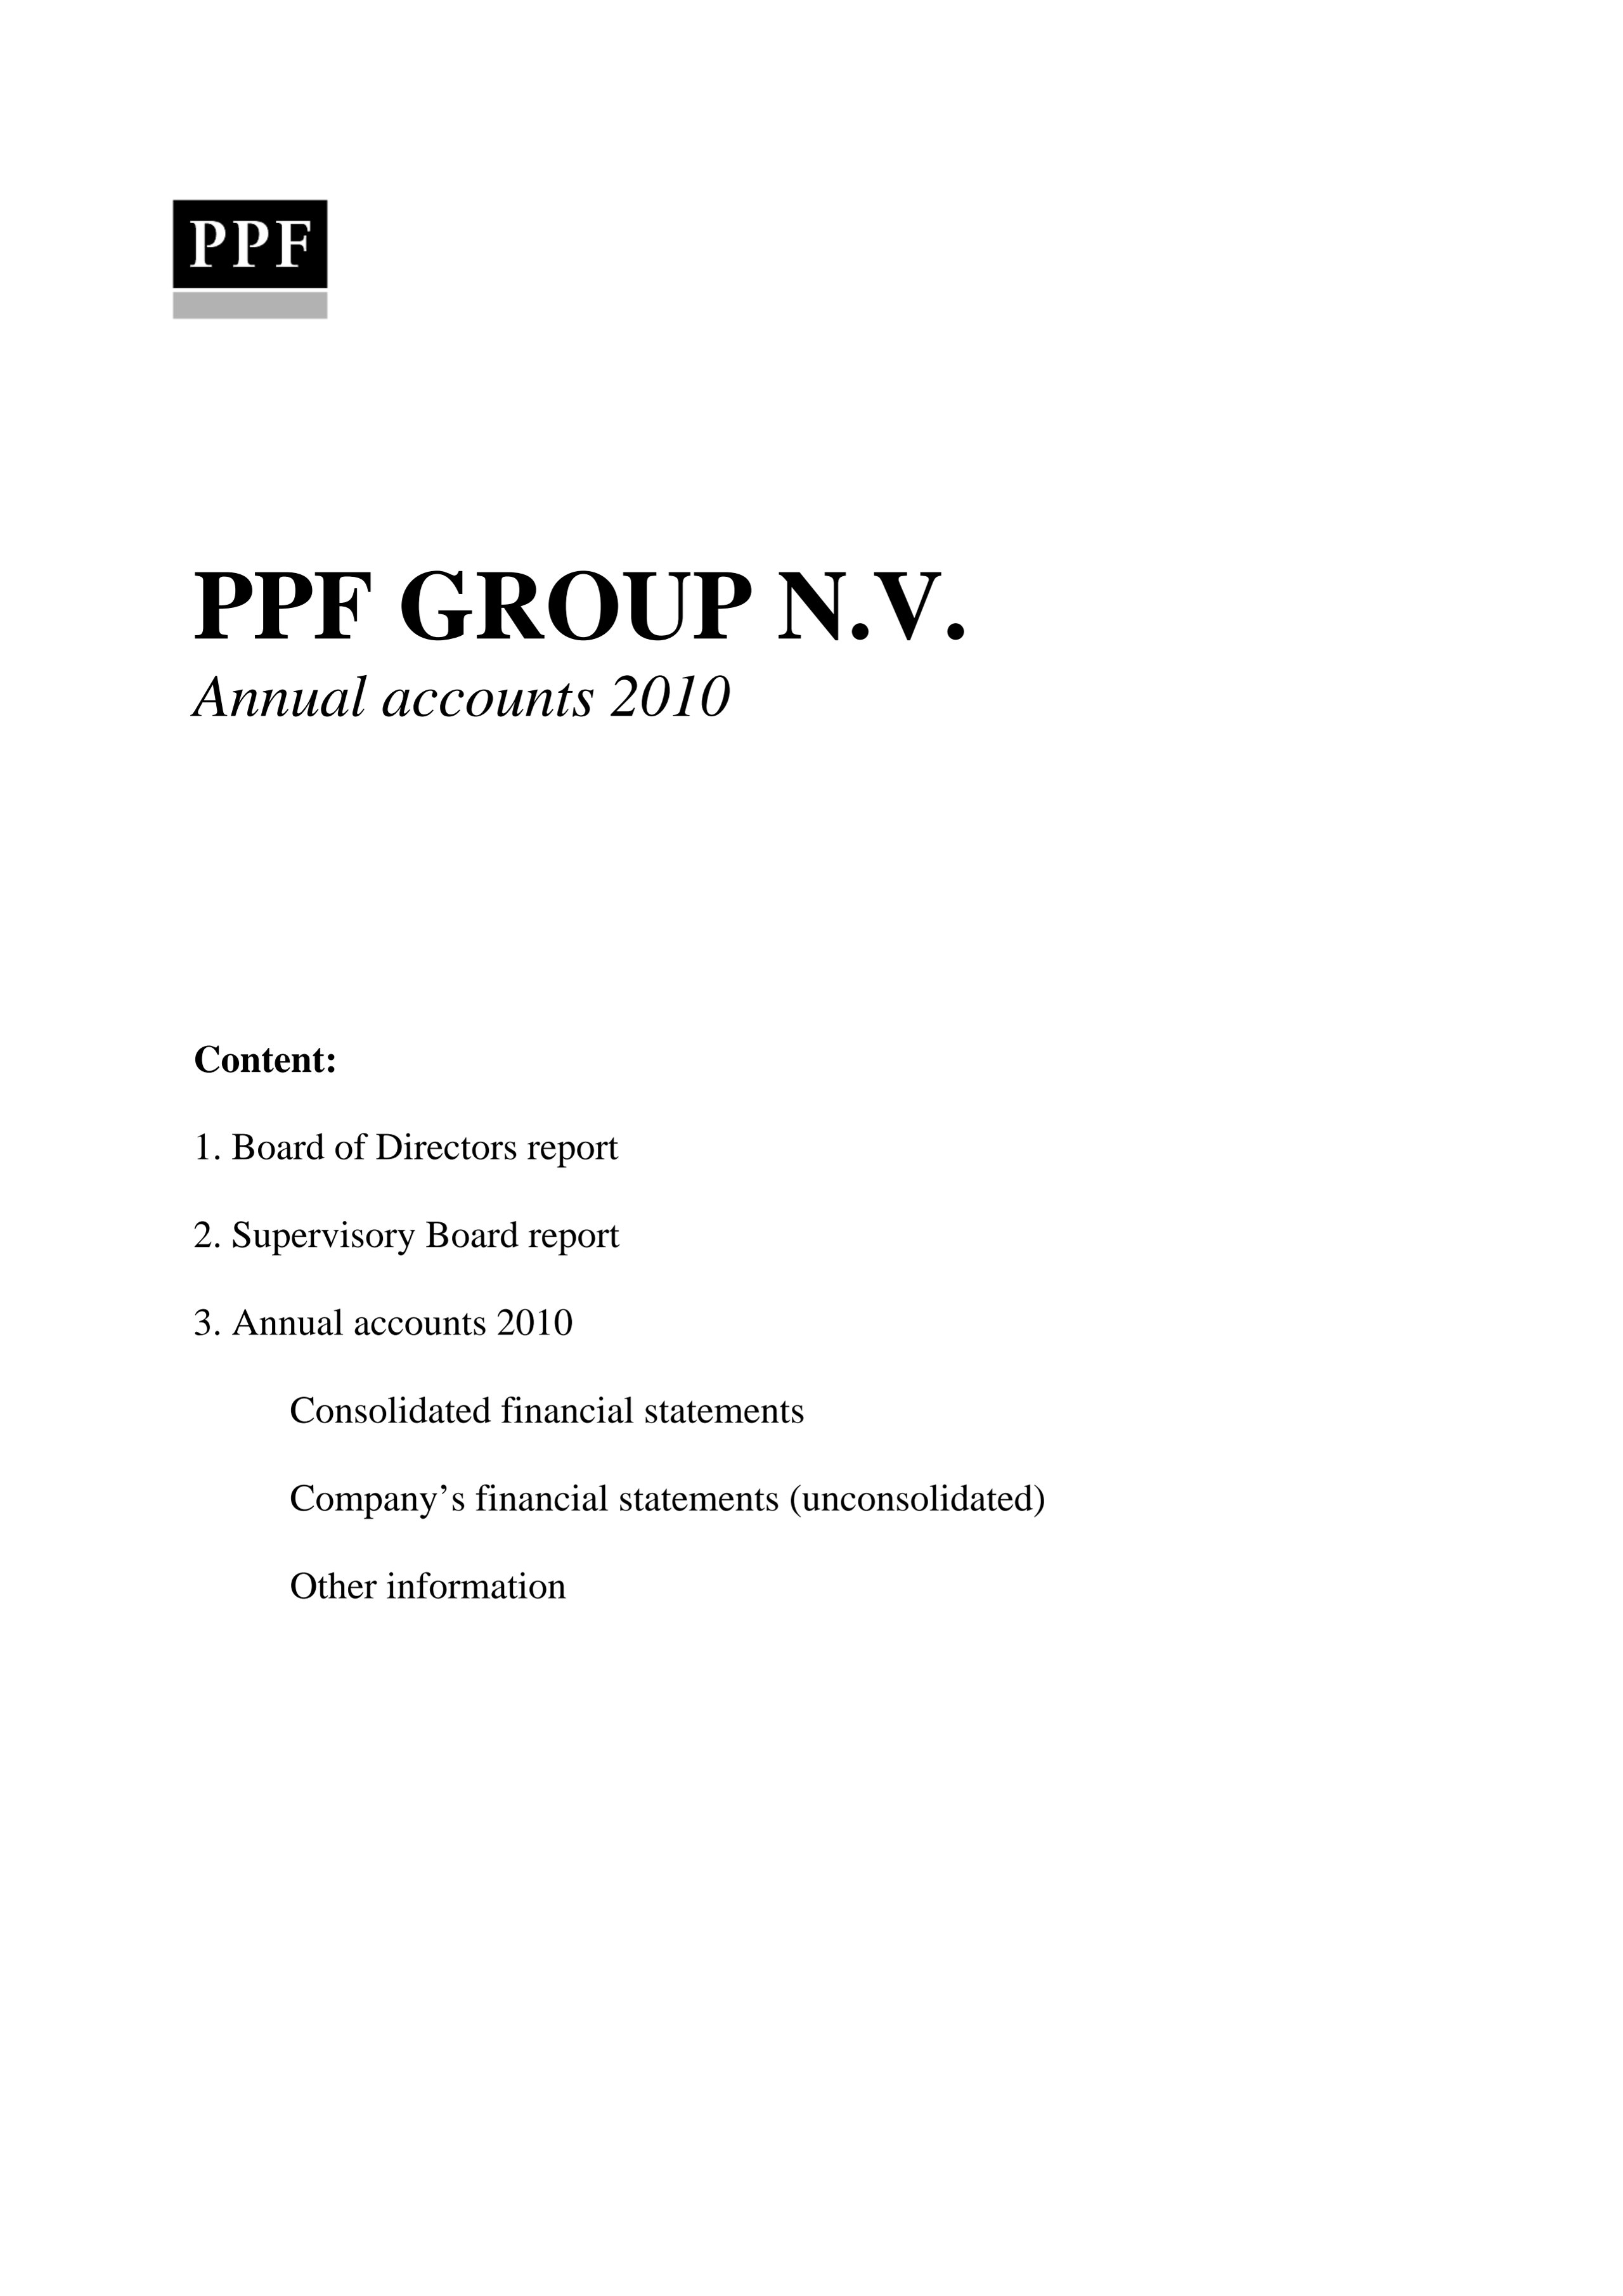 Annual Accounts PPF Group N.V. 2010 (12/6/2010)